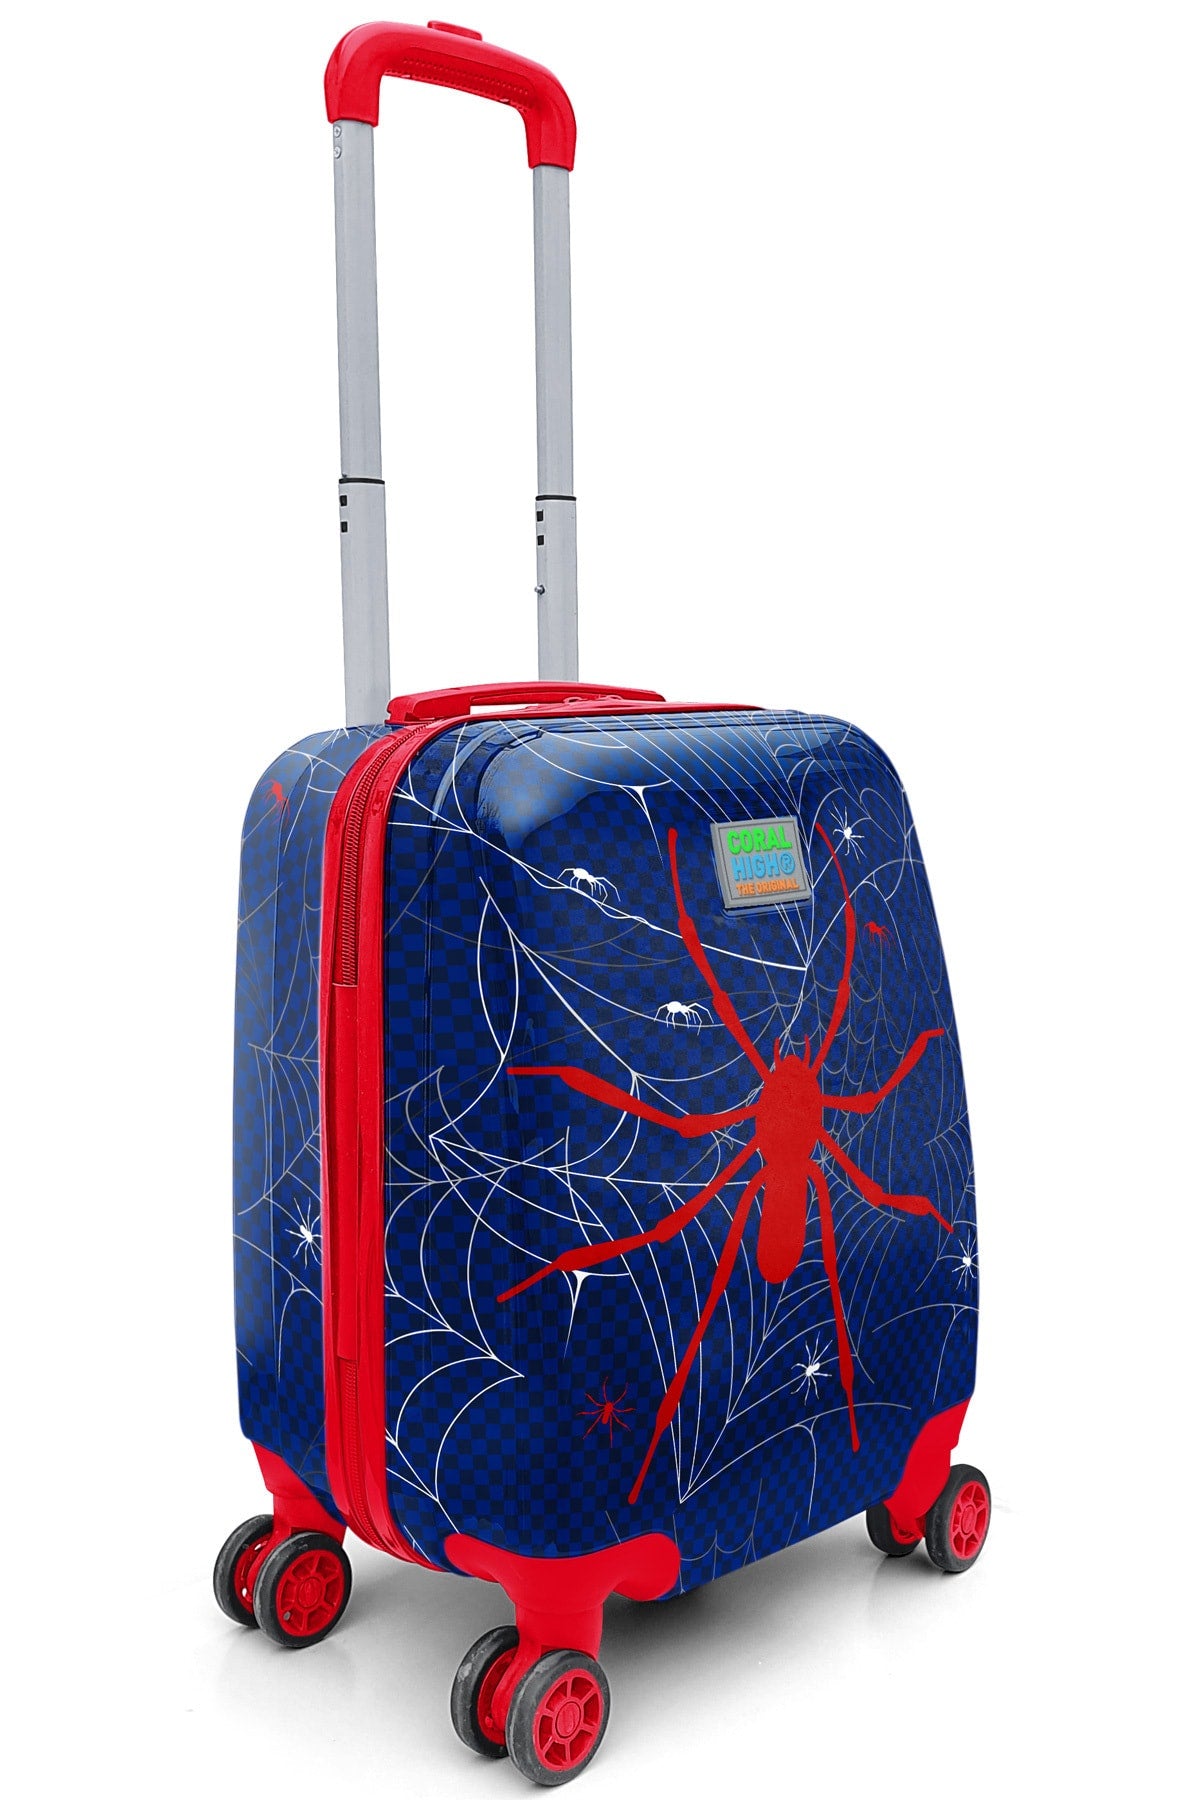 Kids Navy Blue Red Spider Patterned Child Suitcase 16739